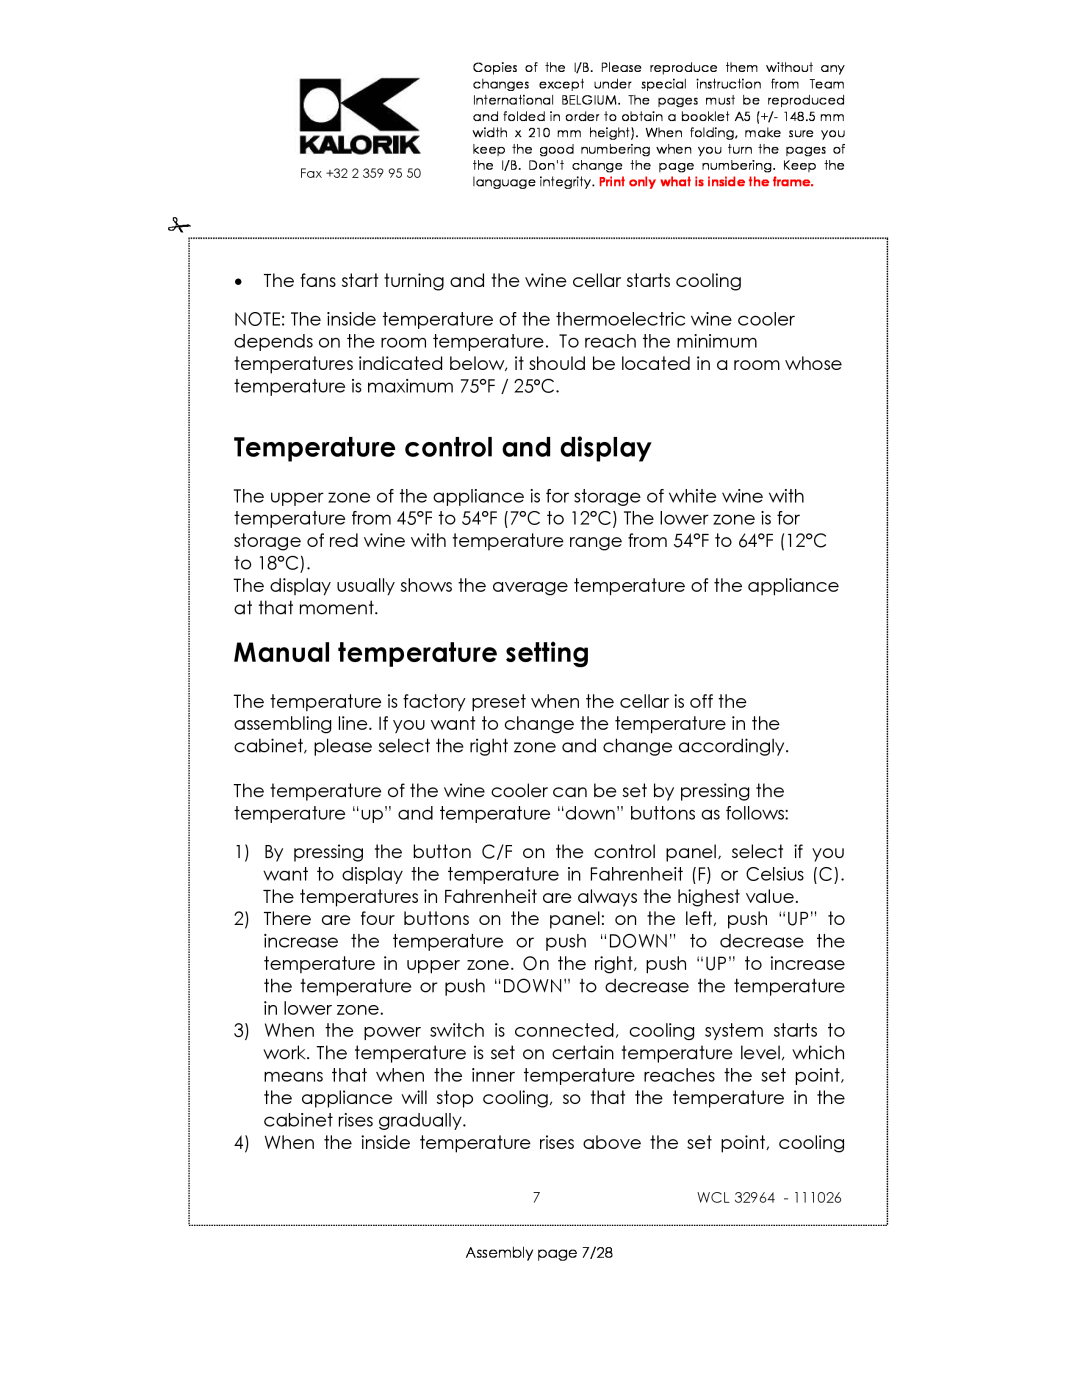 Kalorik USK WCL 32964 115V~130W manual Temperature control and display, Manual temperature setting, Wcl, Assembly page 7/28 